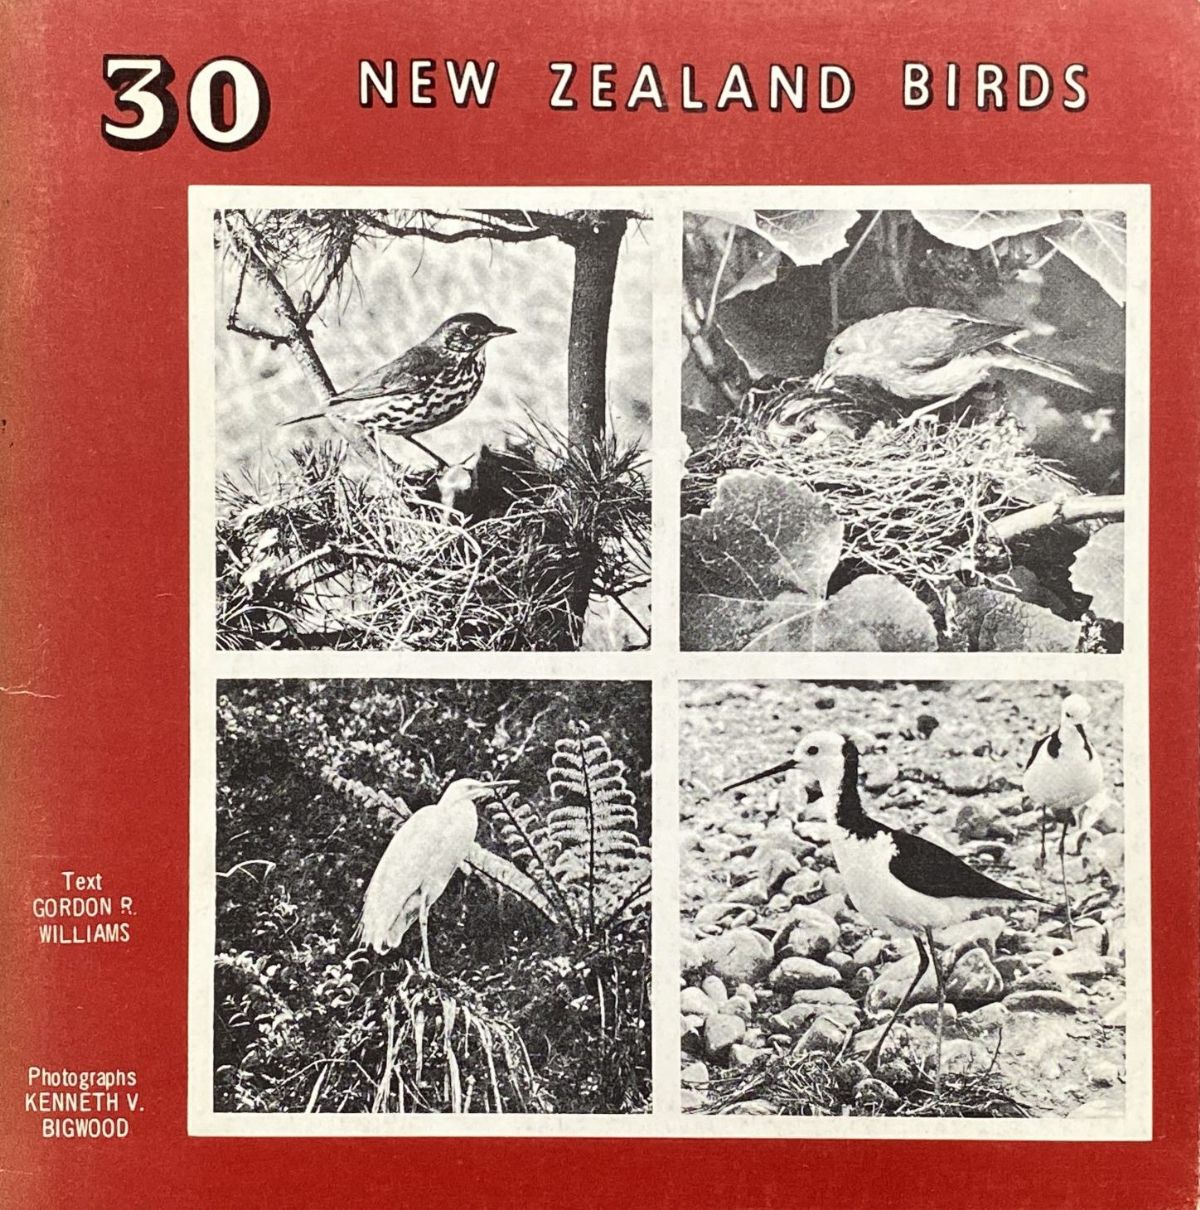 30 NEW ZEALAND BIRDS